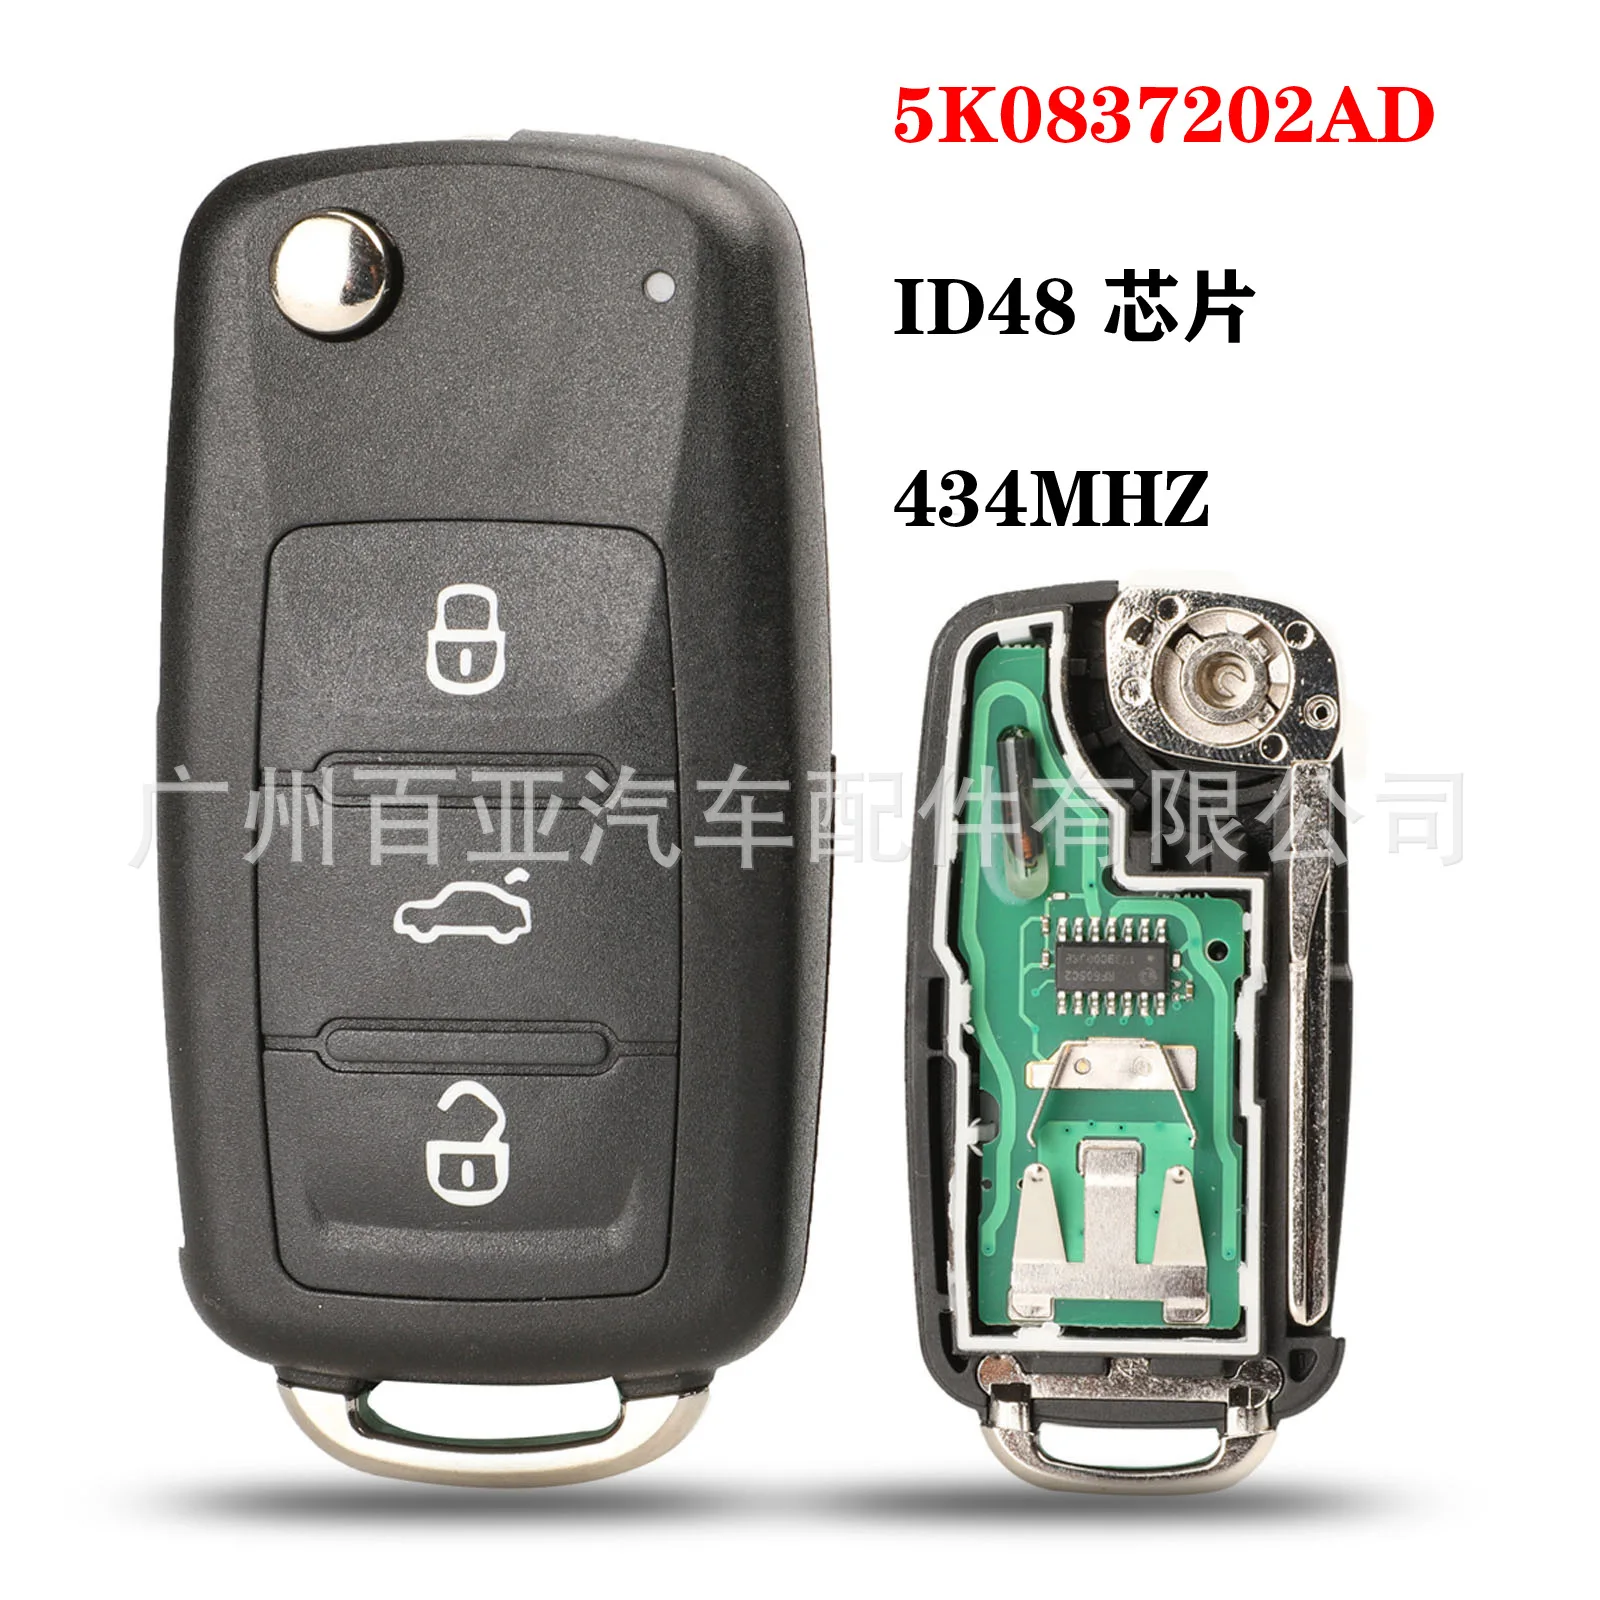 

5pcs/lot 5K0837202AD Flip Key 434Mhz ID48 Chip Remote Control Car Key for VW Polo Sedan Golf 6 Passat B6 Volkswagen Touran Bora